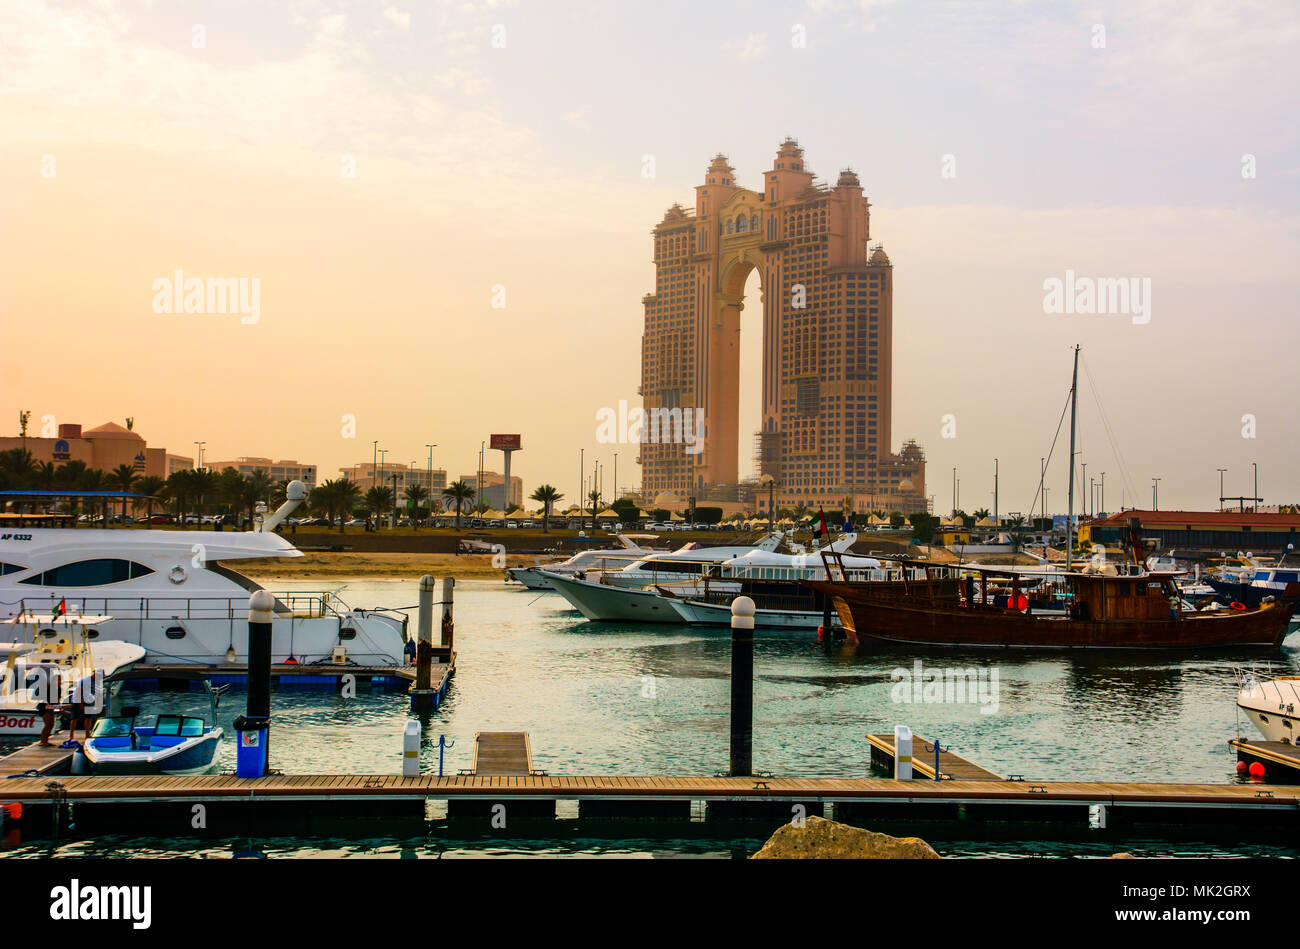 Abu Dhabi, VAE - 27. April 2018: Sonnenuntergang über Al Marina Insel Abu Dhabi mit Atlantis Hotel und Yachten anzeigen Stockfoto